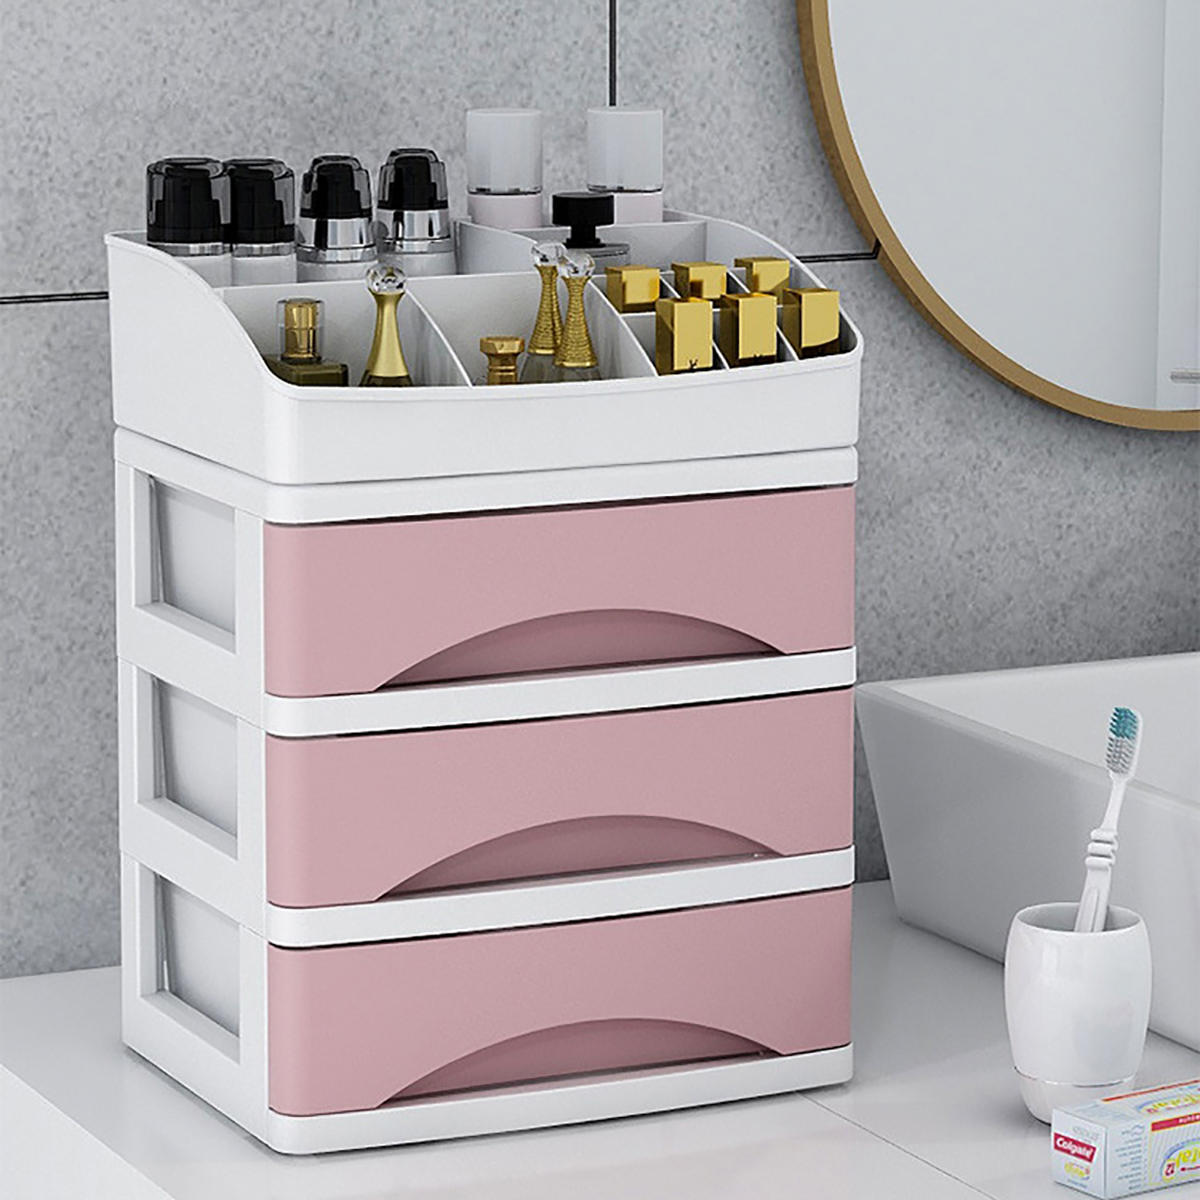 2/3 Layer Cosmetic Makeup Organiser Holder Tidy Storage Jewelry Box Shelf Cabinet Drawer